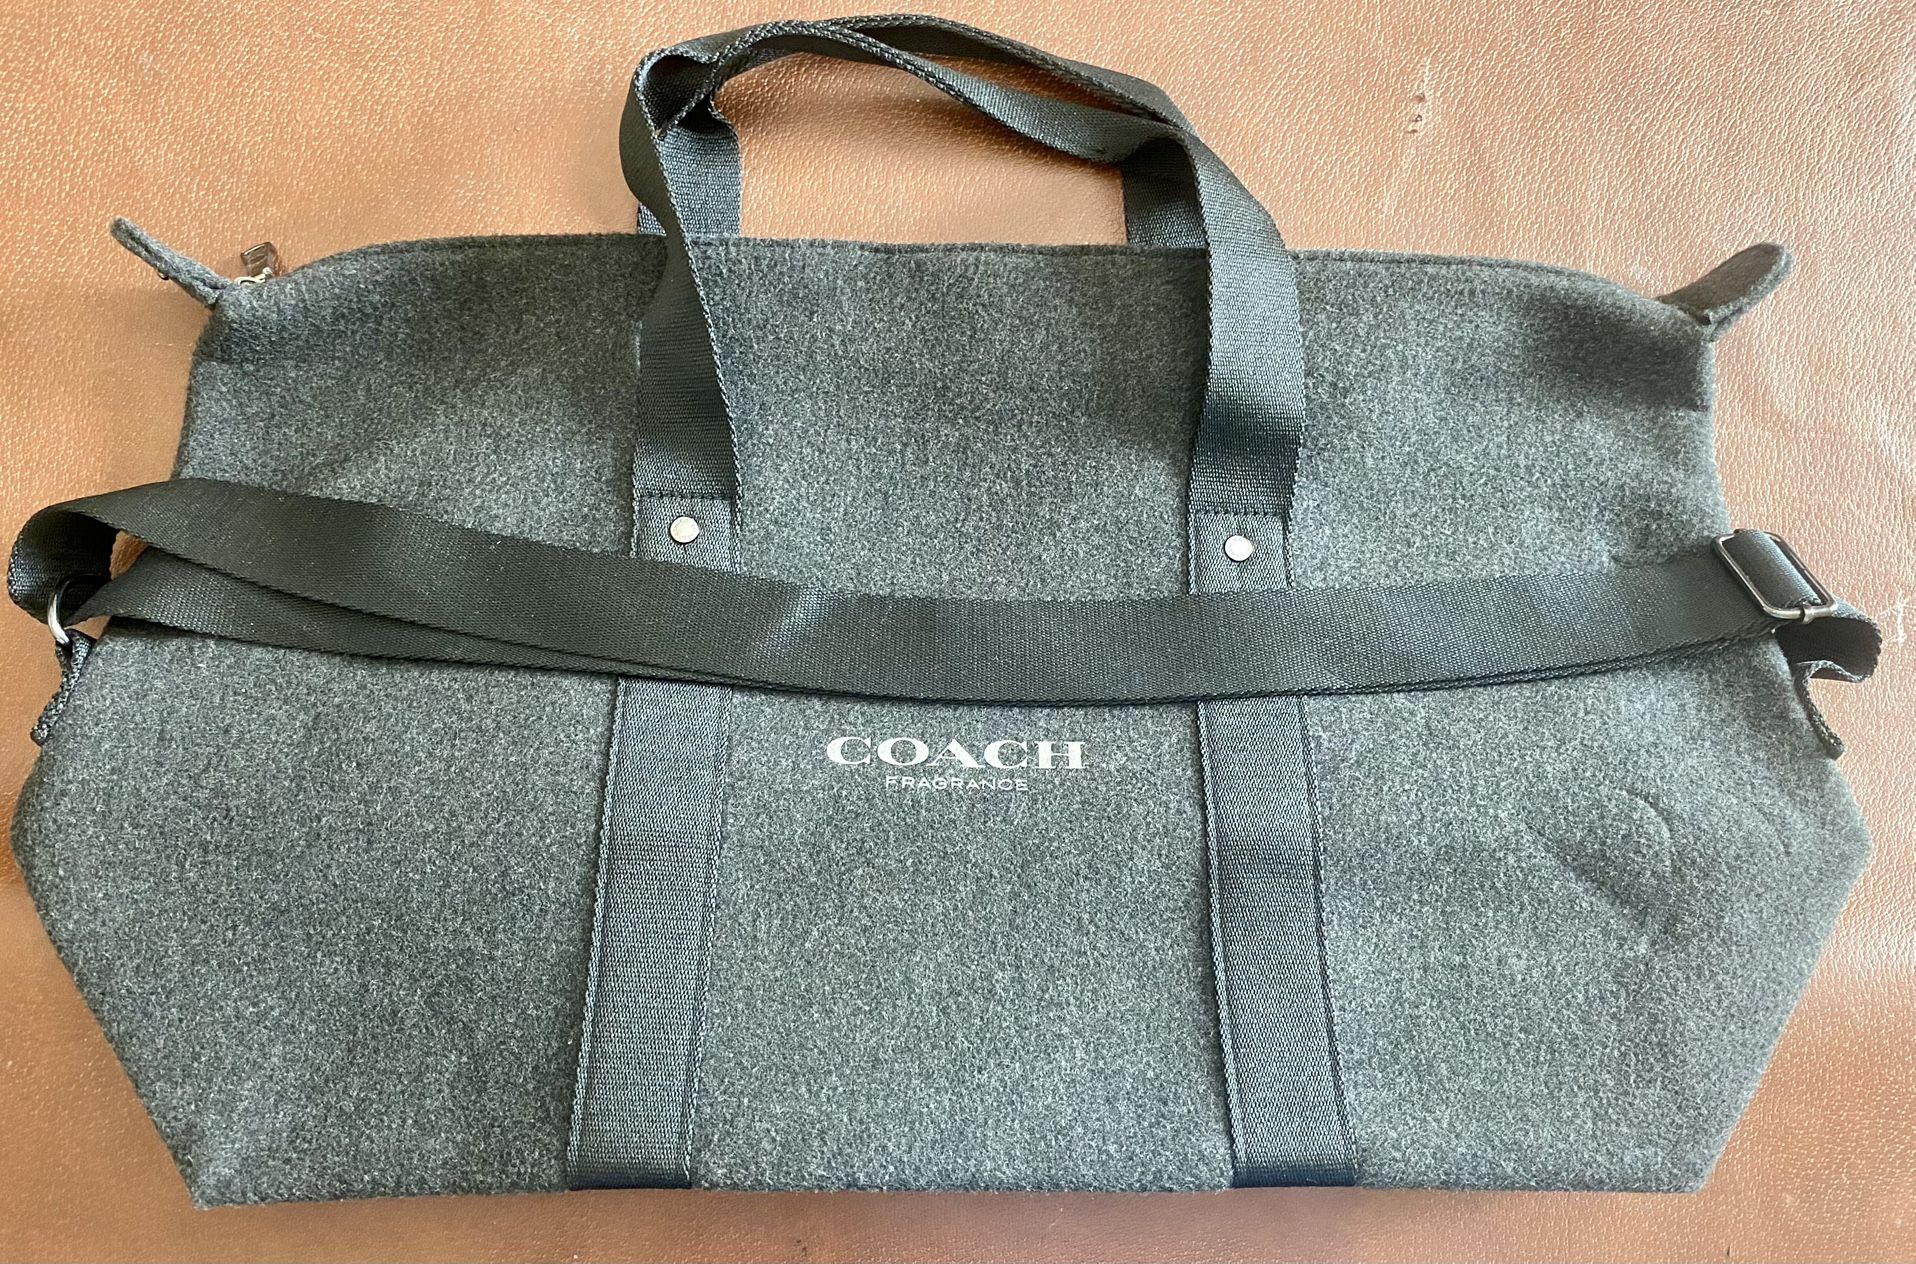 NEW Coach Fragrance Travel Bag